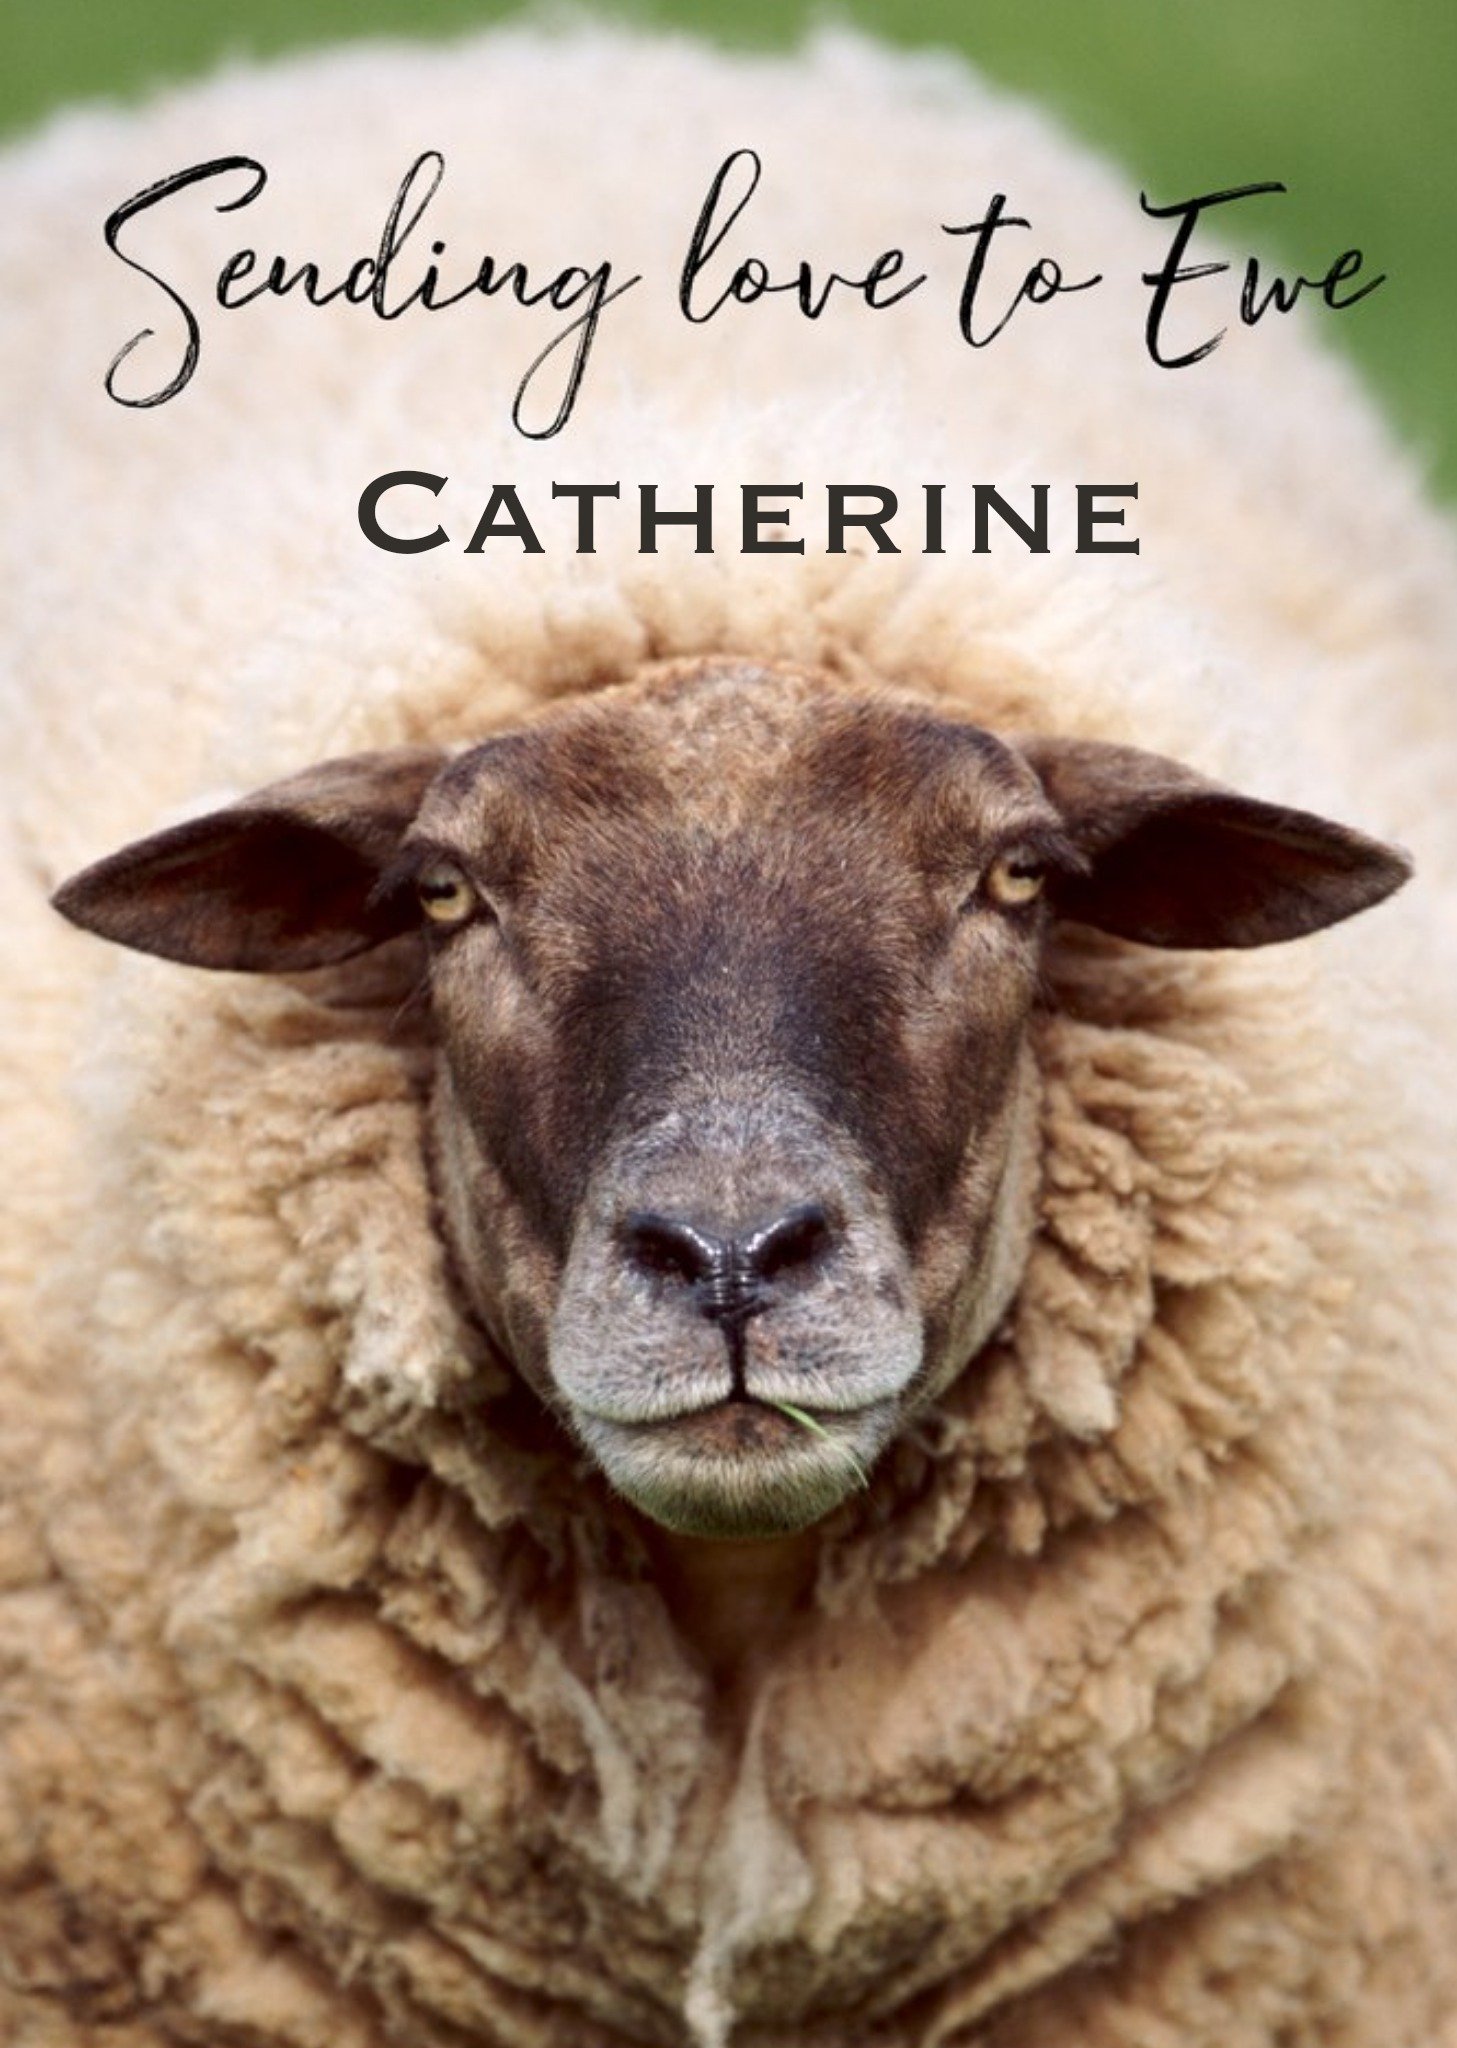 Moonpig Harmonia Ireland Photo Of Sheep Sending Love To Ewe Card Ecard